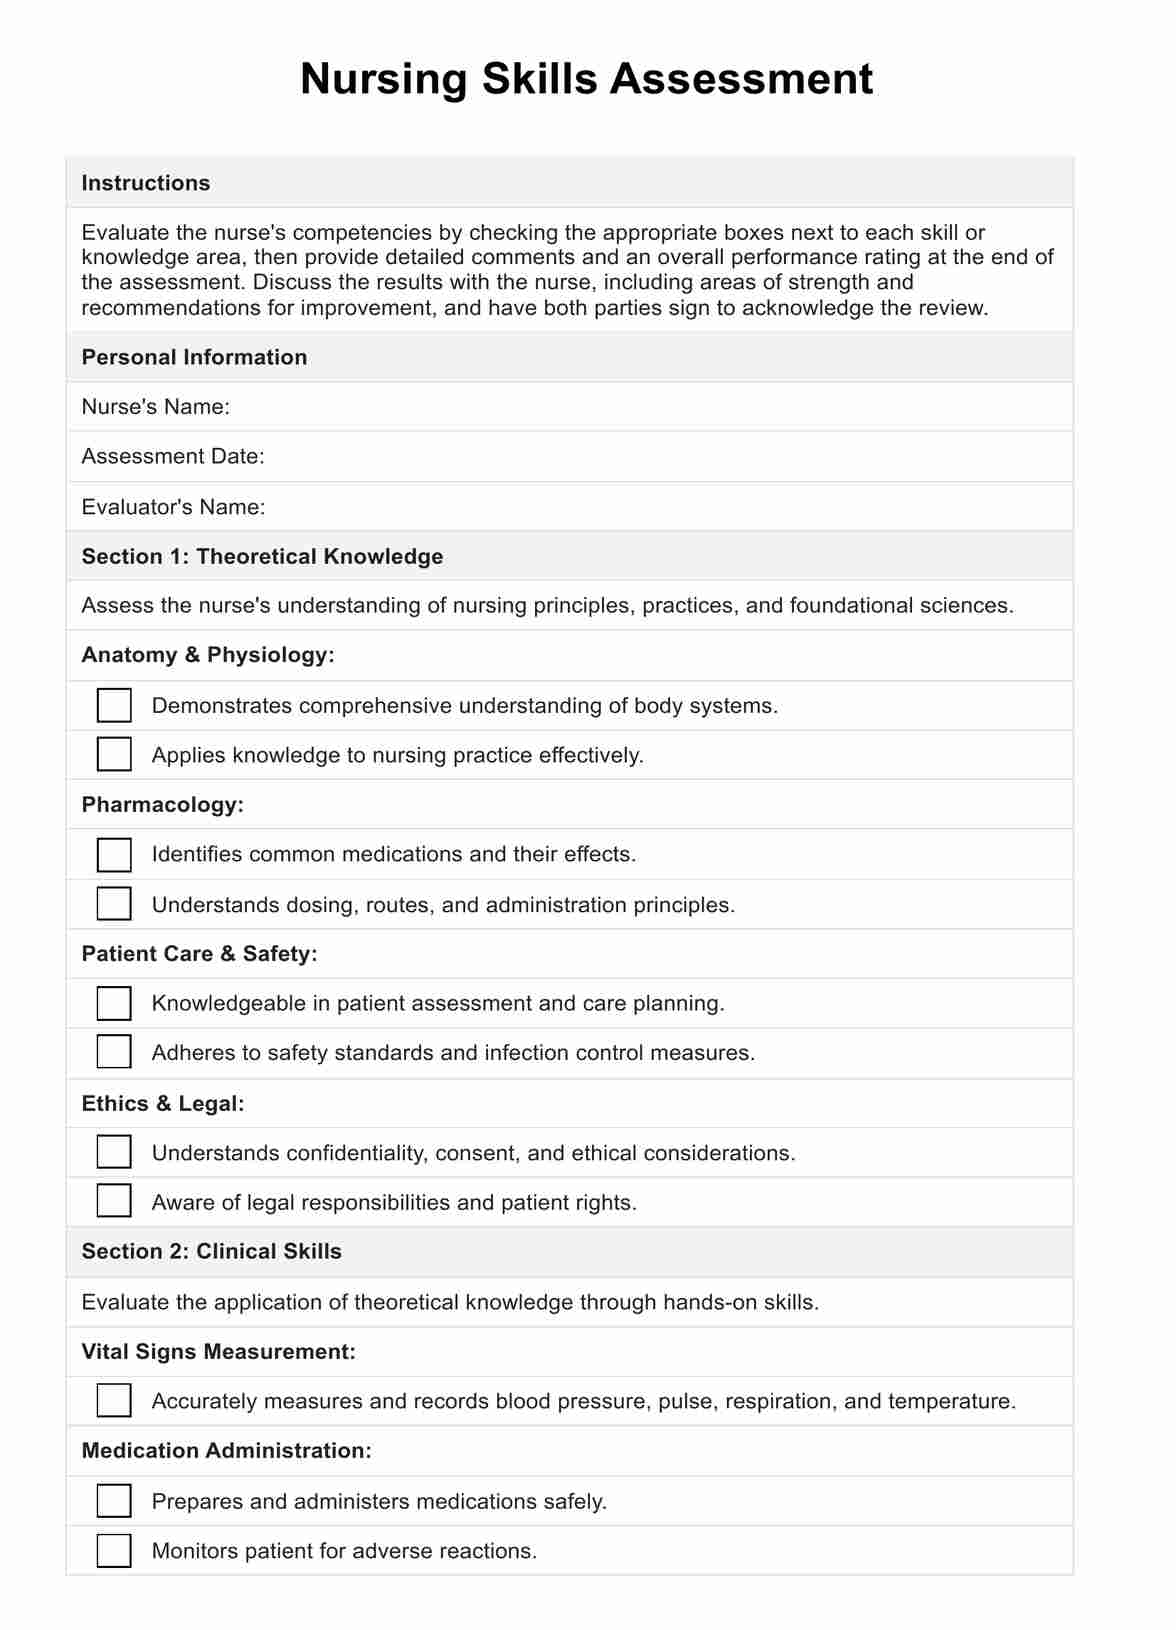 Nursing Skills Assessment PDF Example